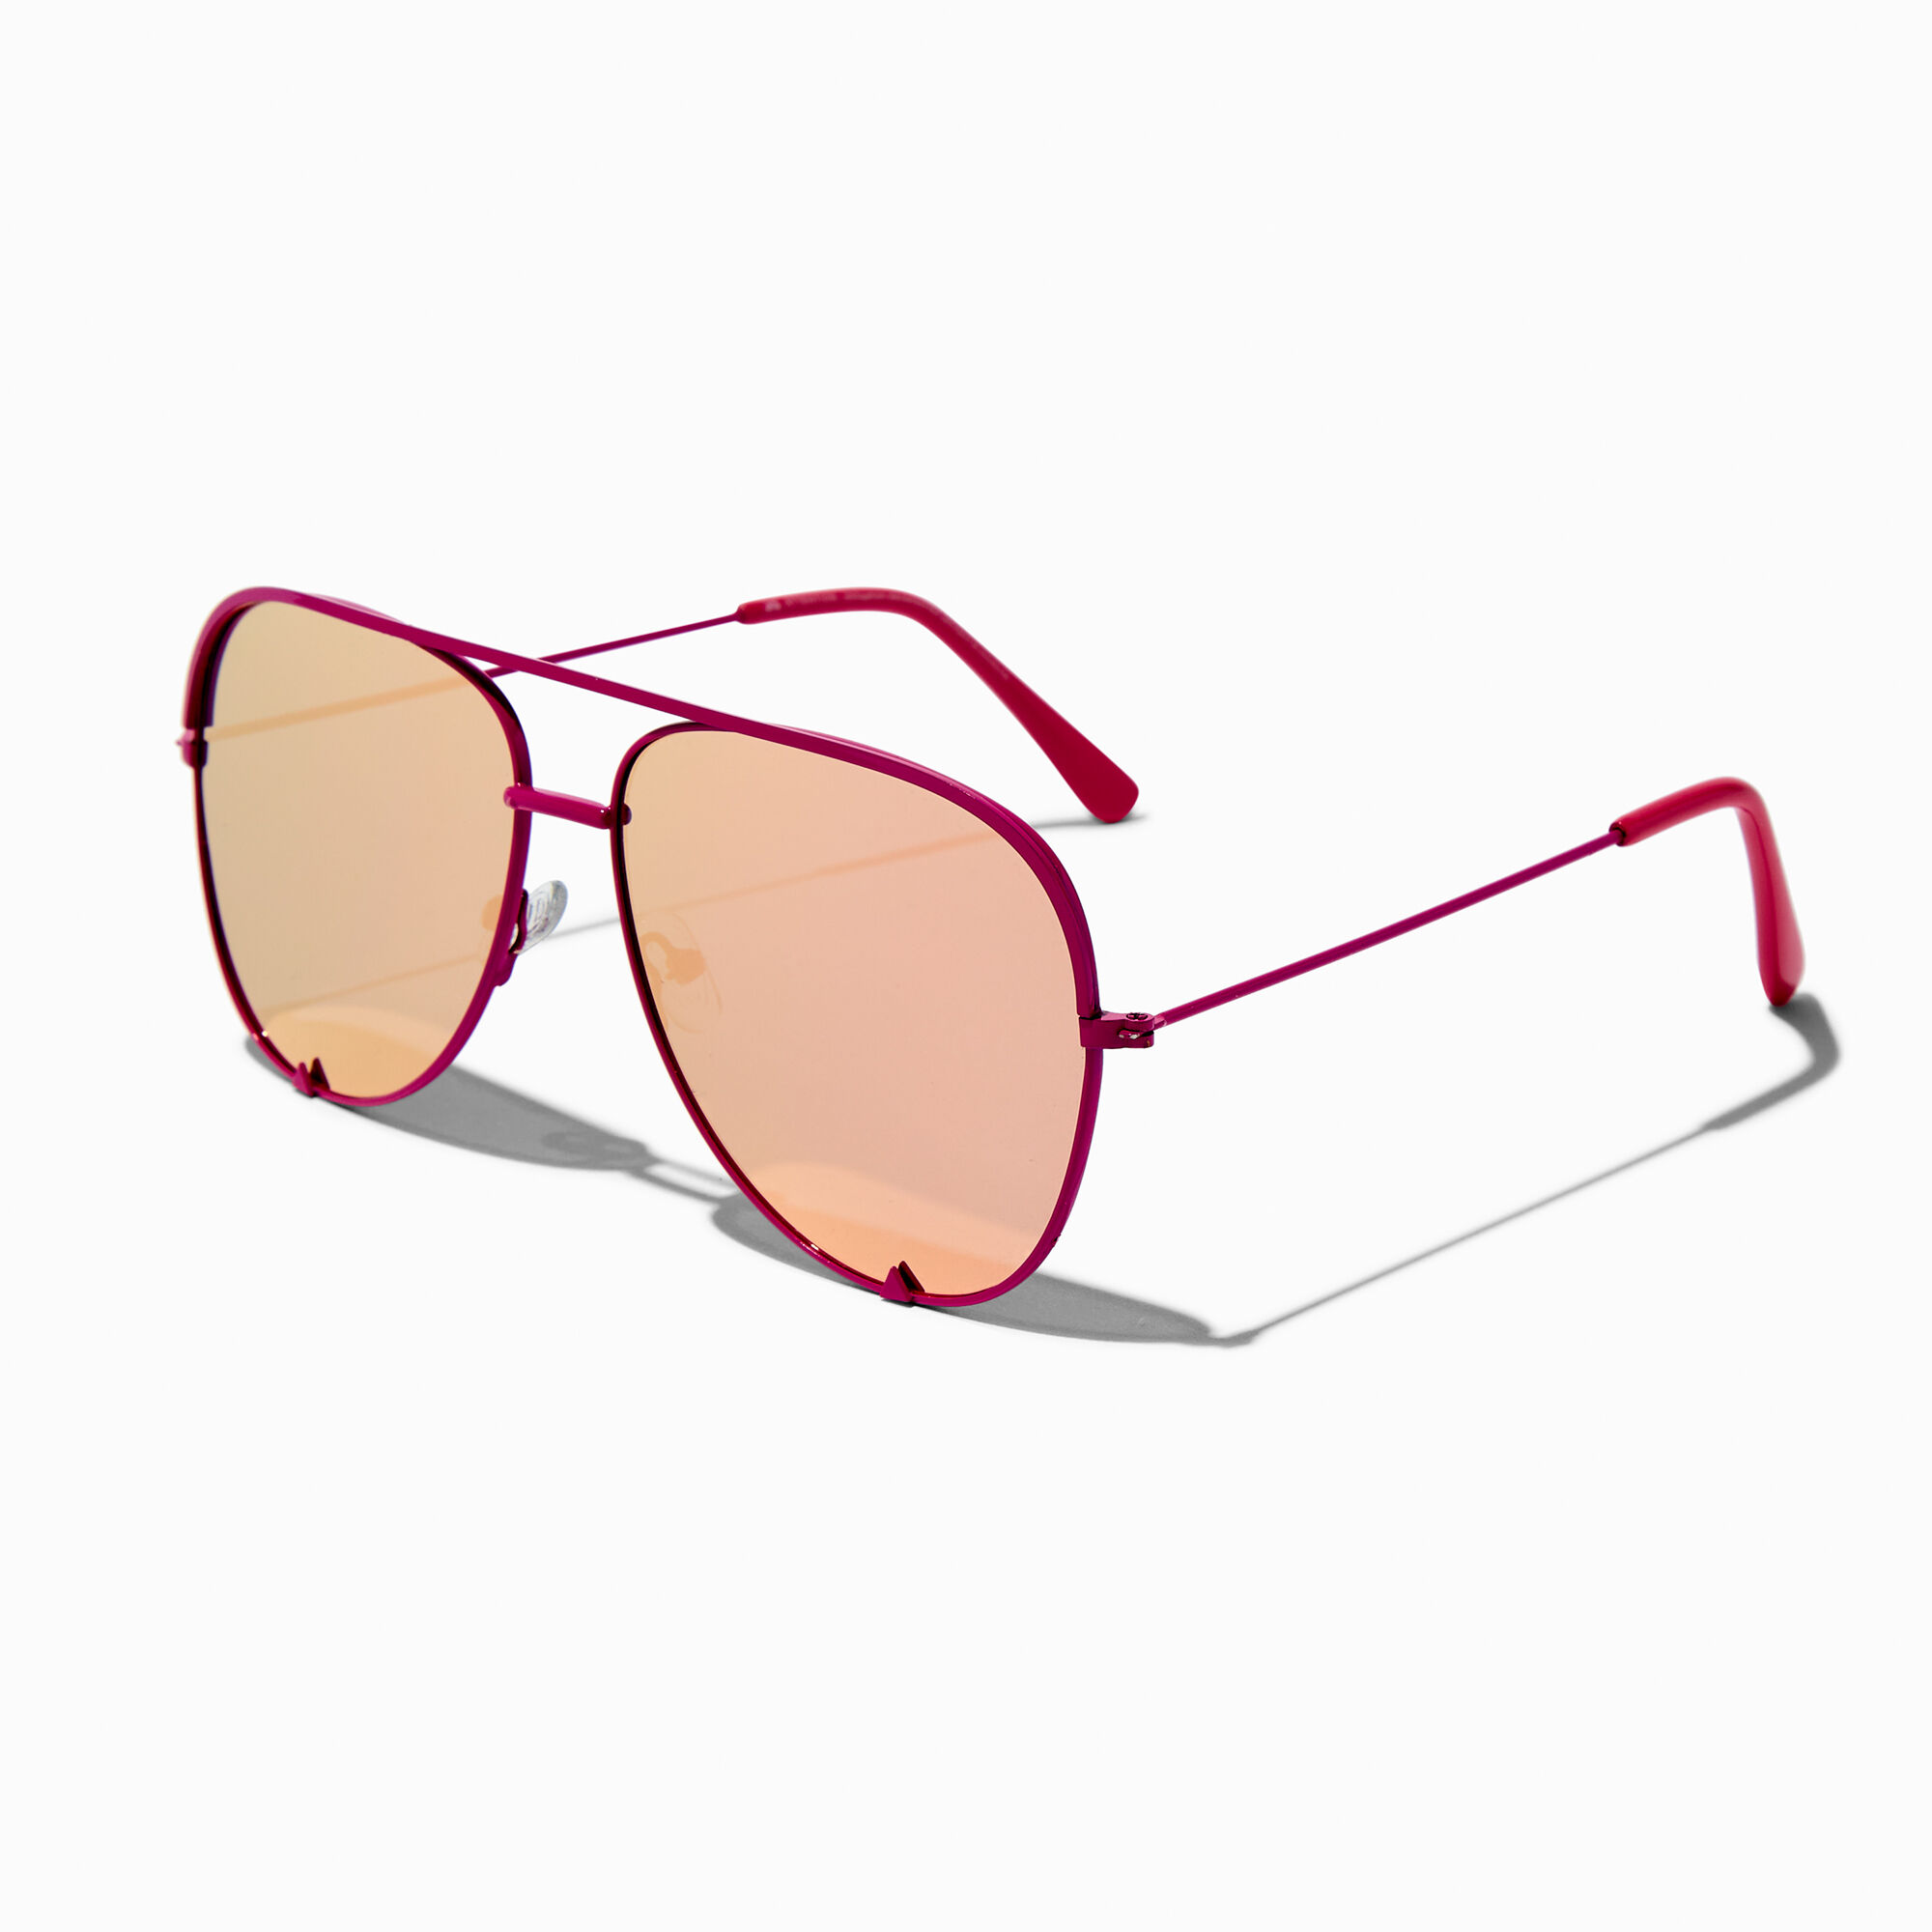 View Claires Rim Aviator Sunglasses Fuchsia information